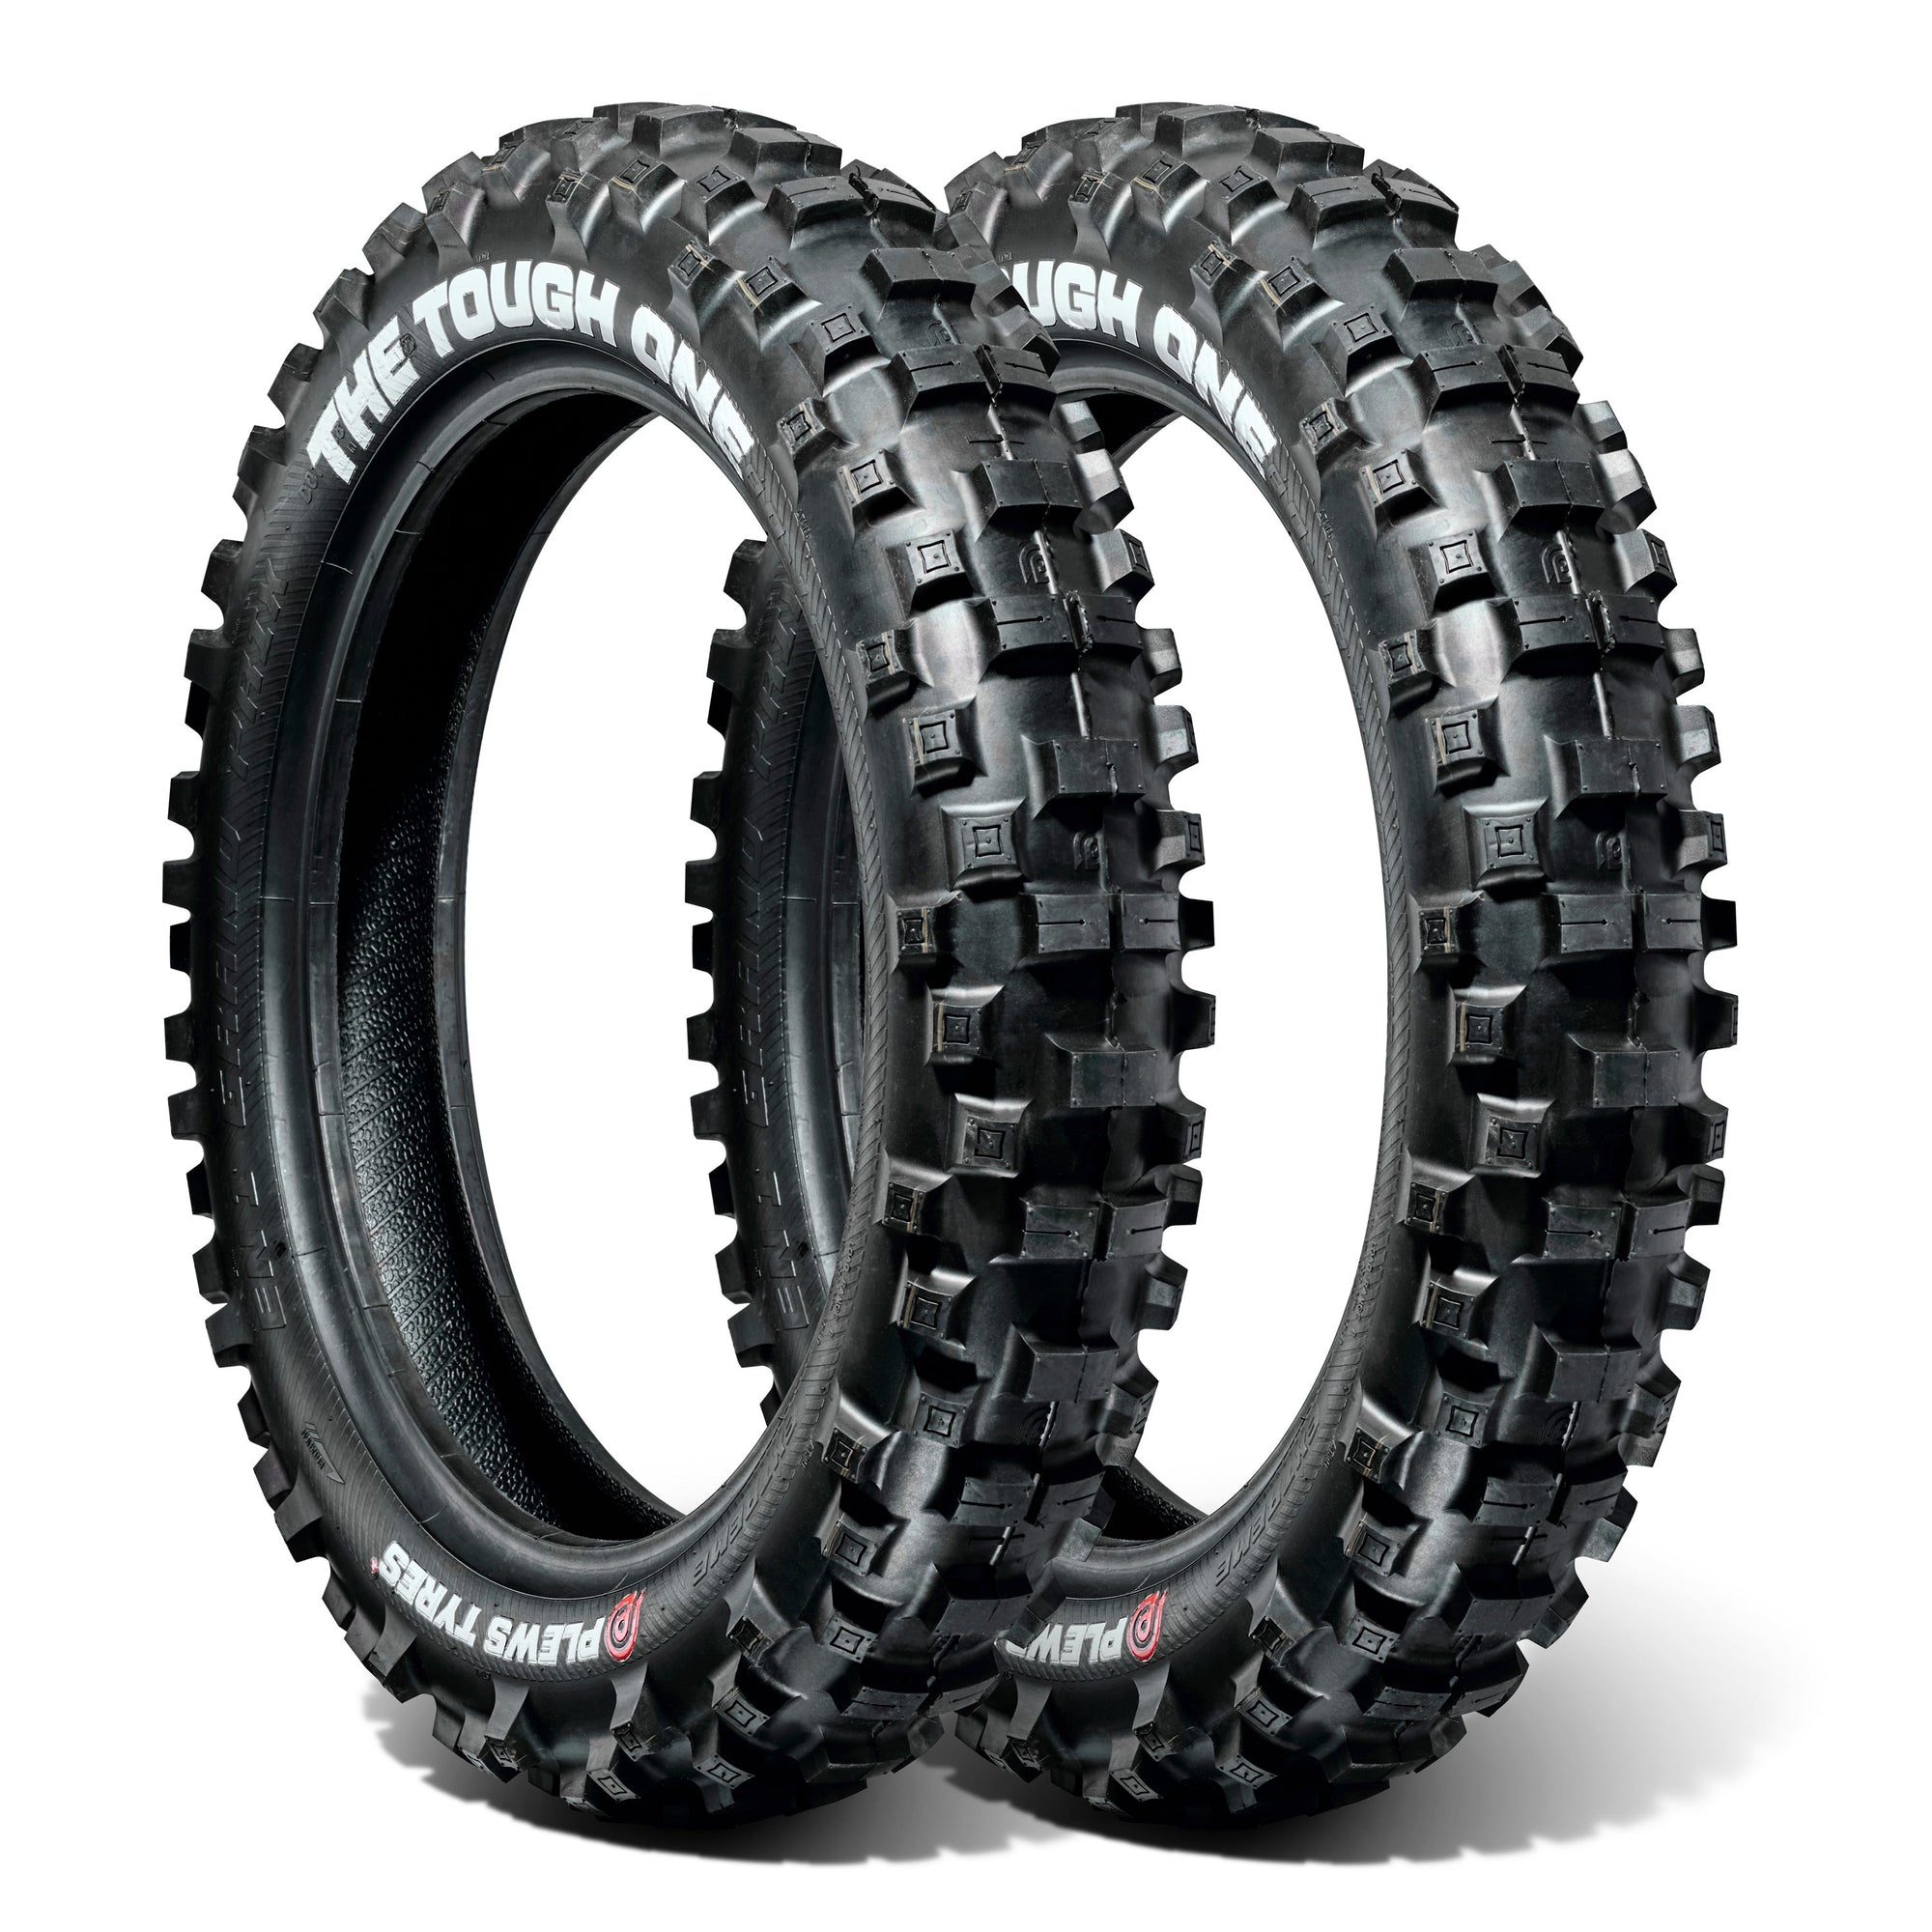 Plews Tyres | Enduro Double Rear Set | Two EN1 THE TOUGH ONE Rear Enduro Tire Bundle - 3/4 view